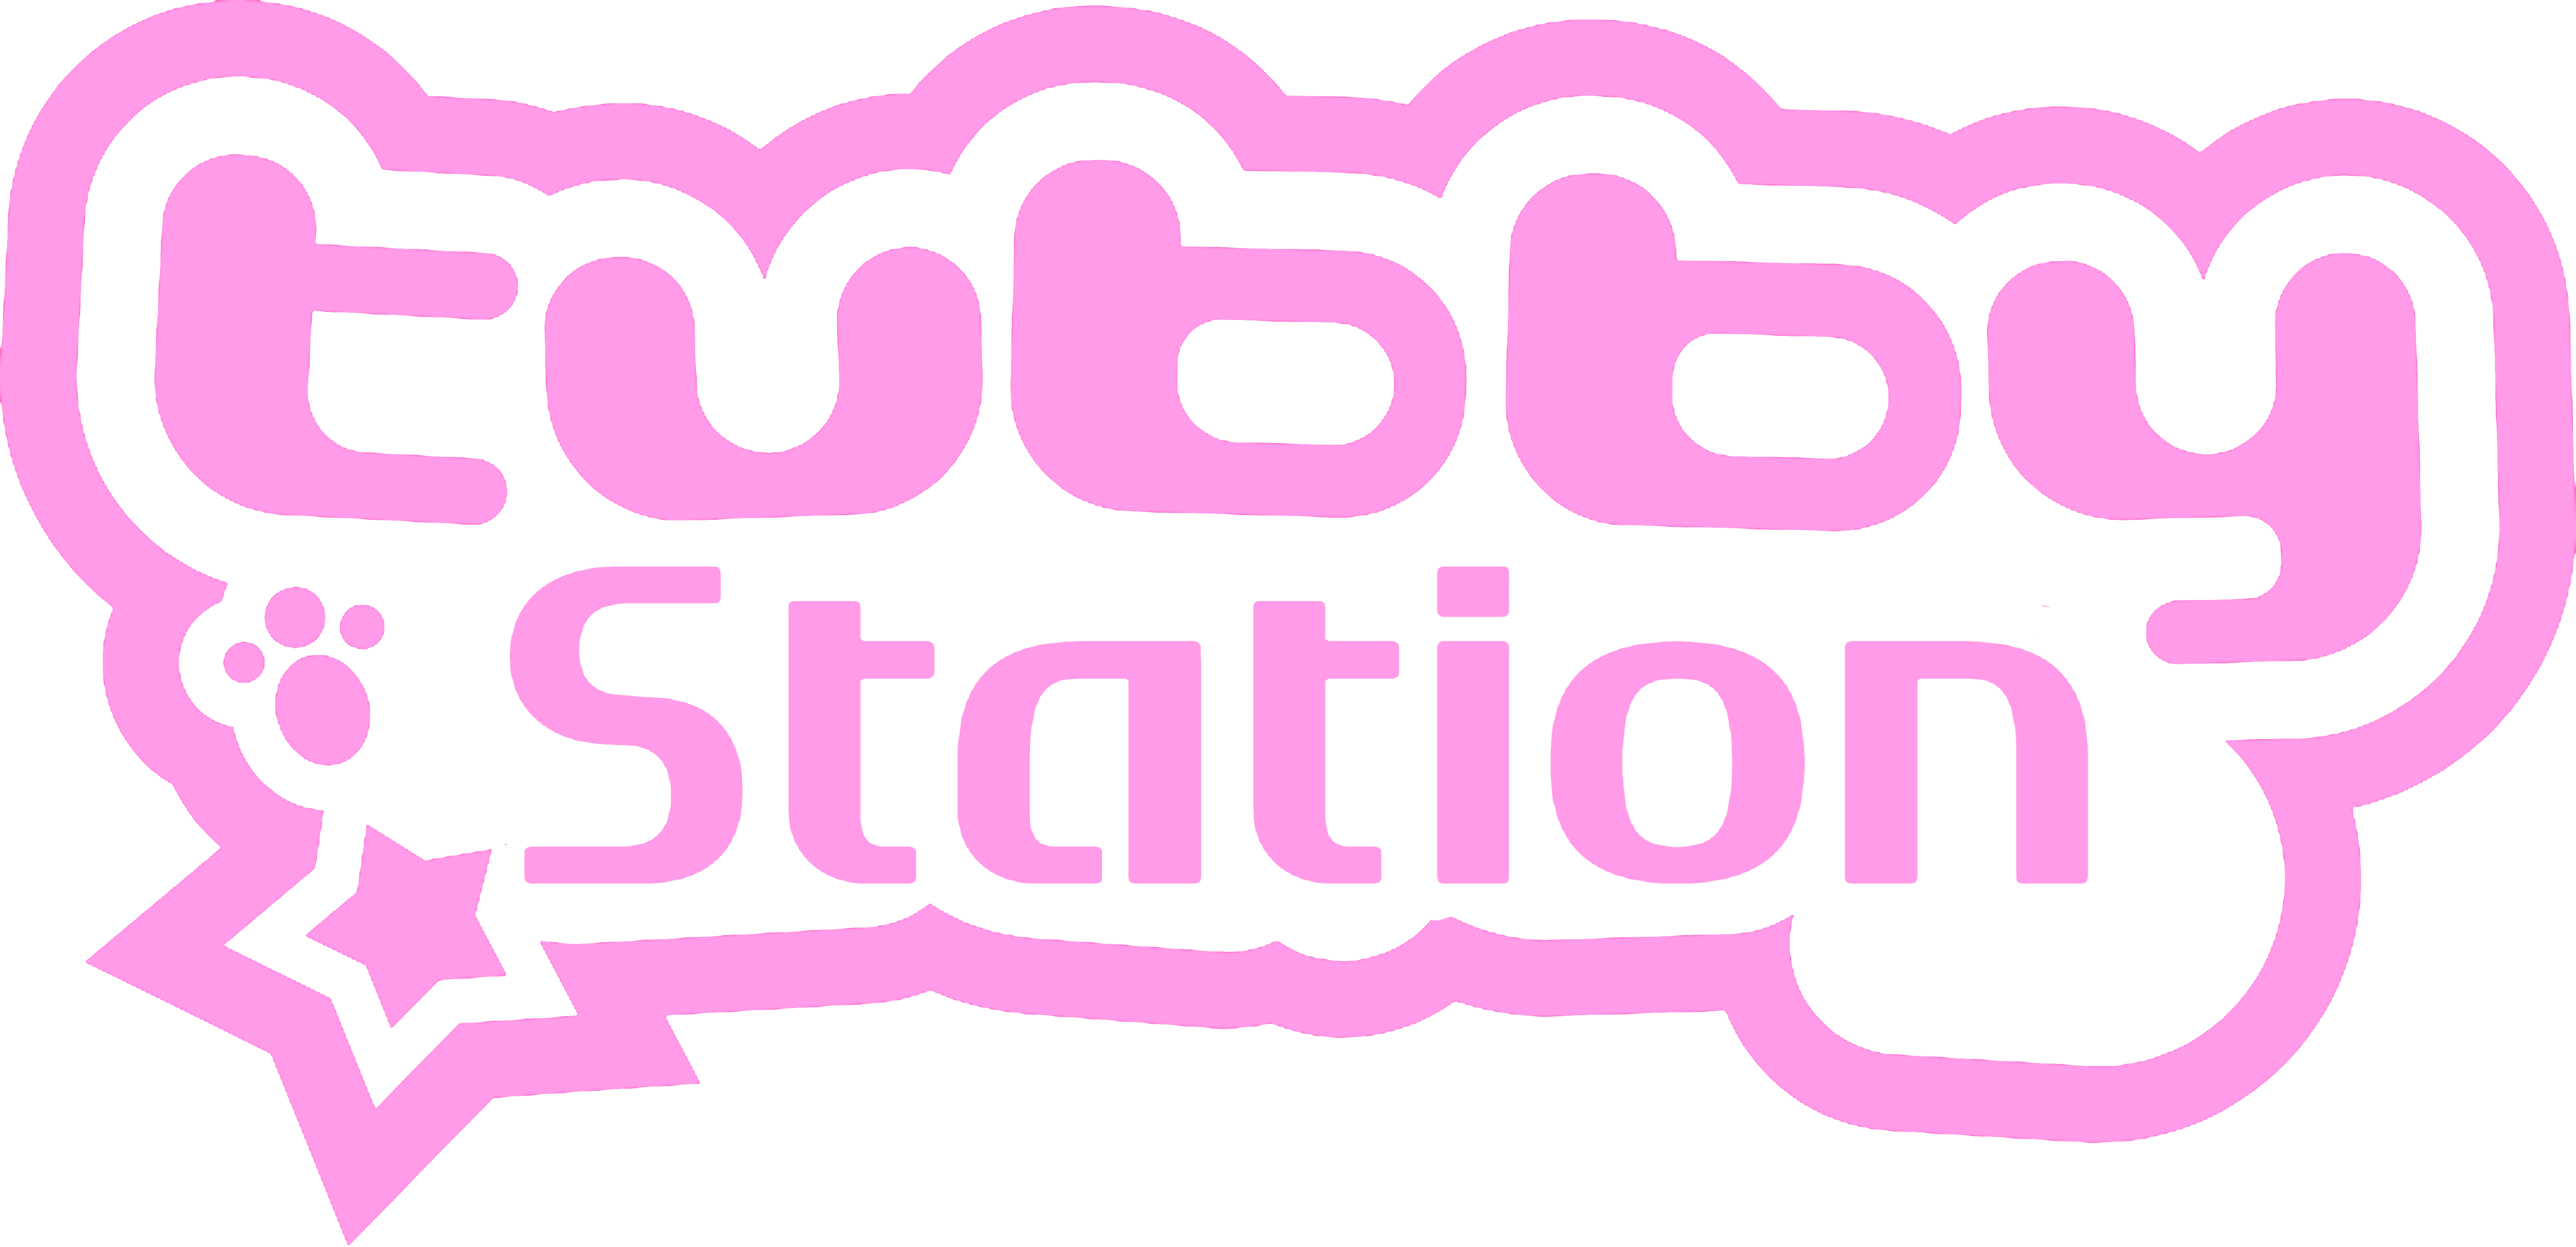 tubby station logo